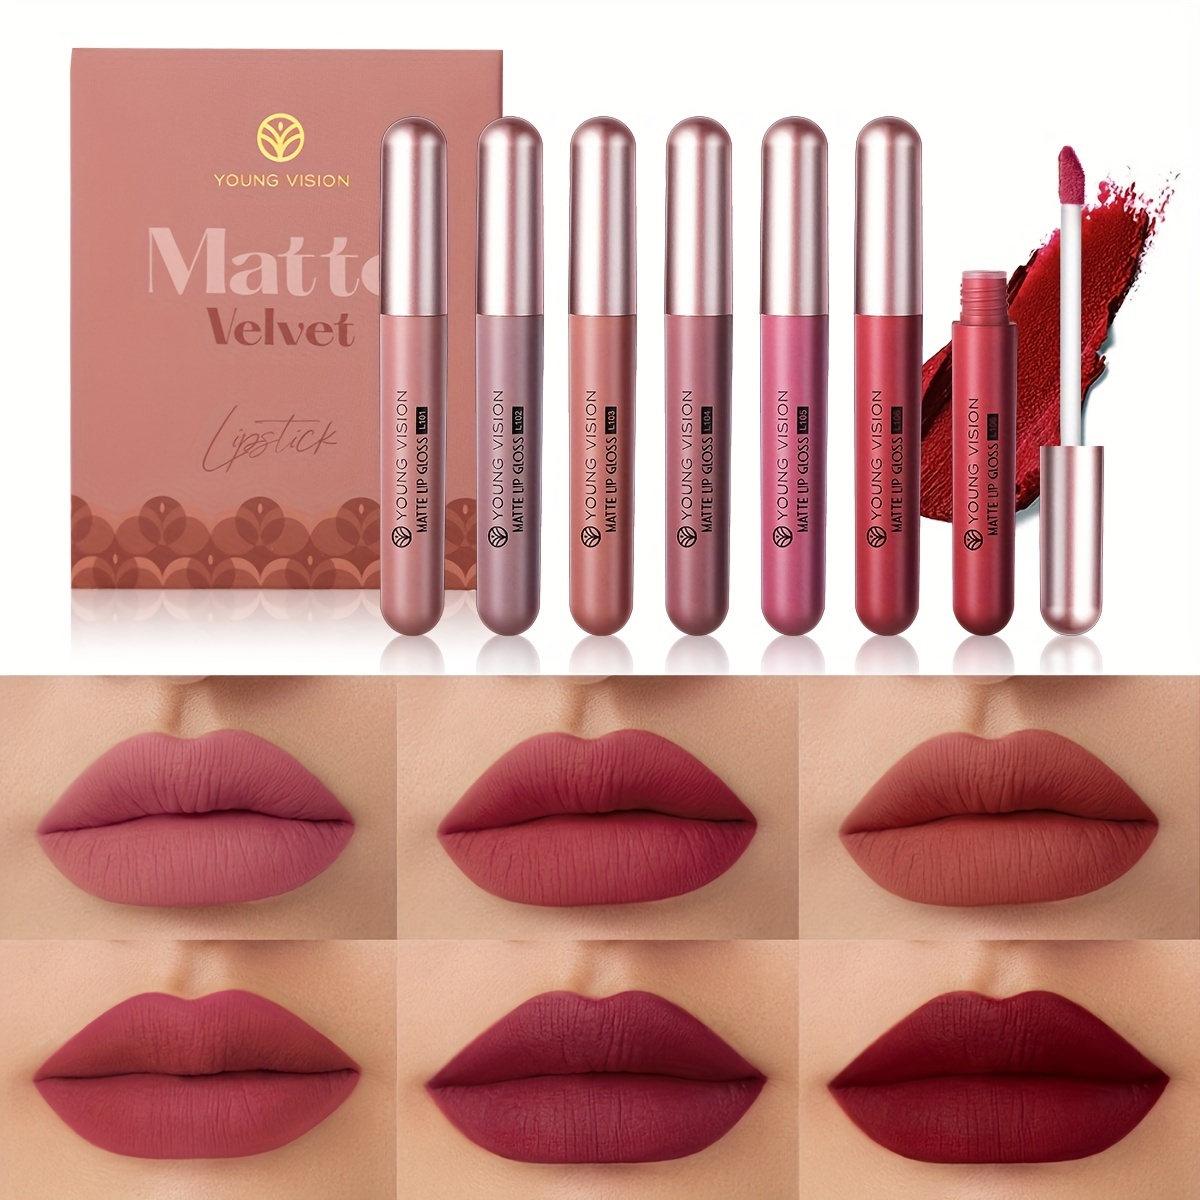 

6 Pcs/set Waterproof Matte Velvet Lipgloss - Long-lasting Liquid Lipstick Lip Gloss Set For Flawless Makeup Valentine's Day Gifts